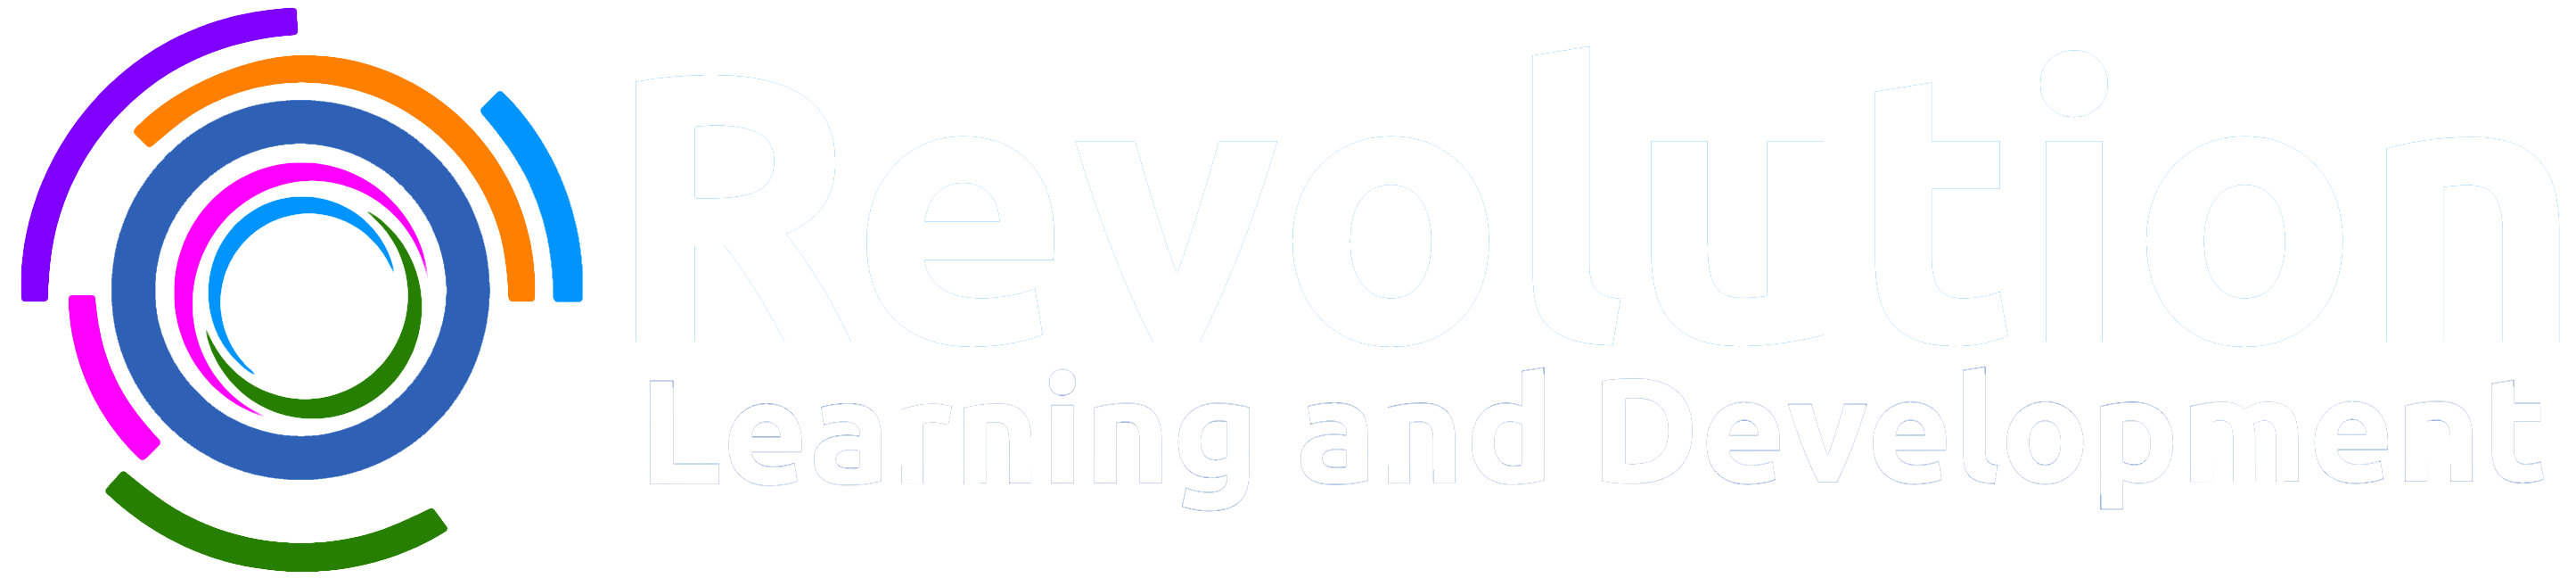 Revolution Learning and Development – Latvia